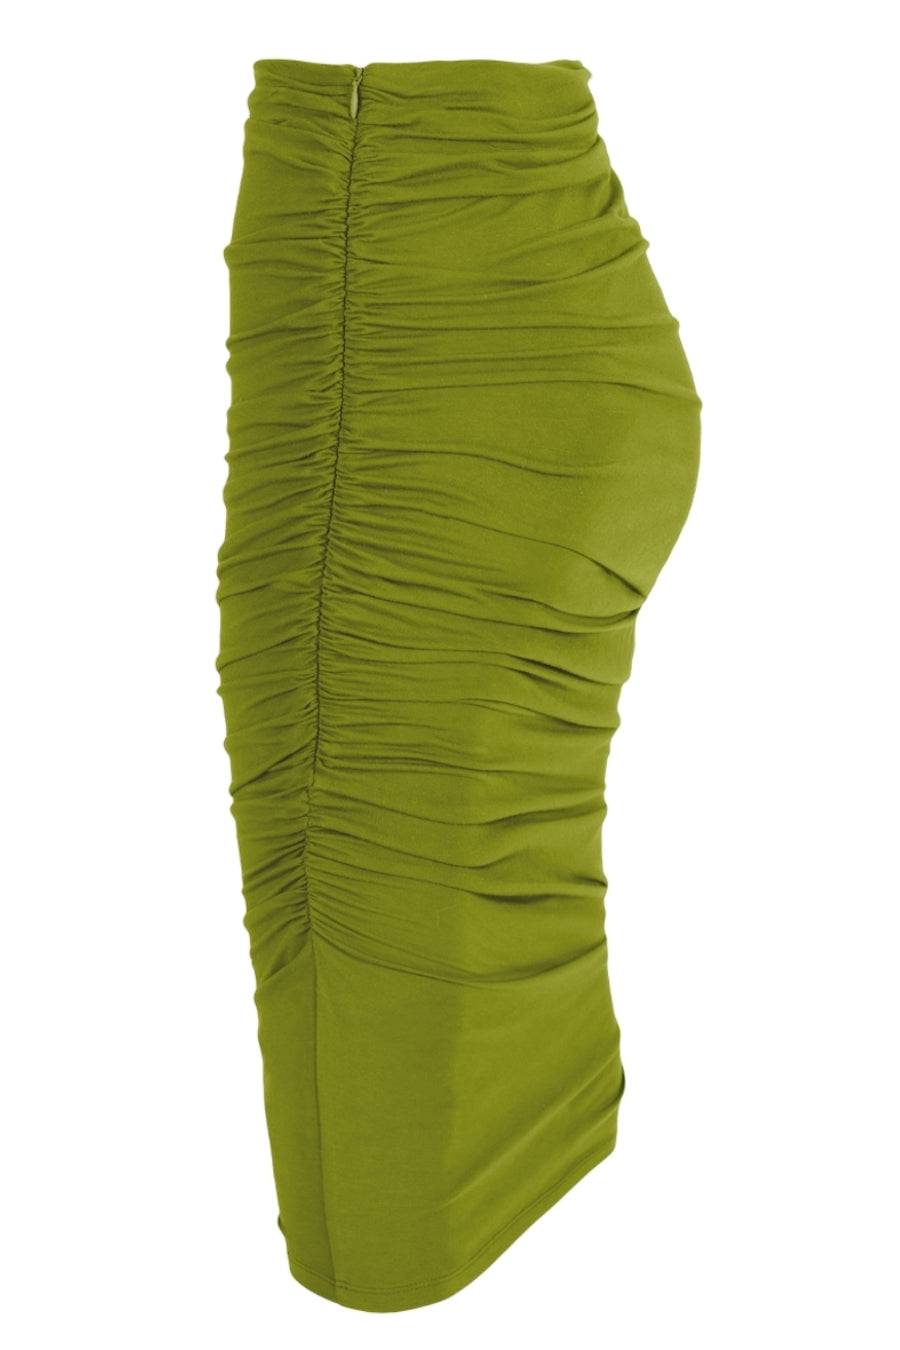 Embodycon™ Bamboo Shaping Skirt - Olive Embodycon